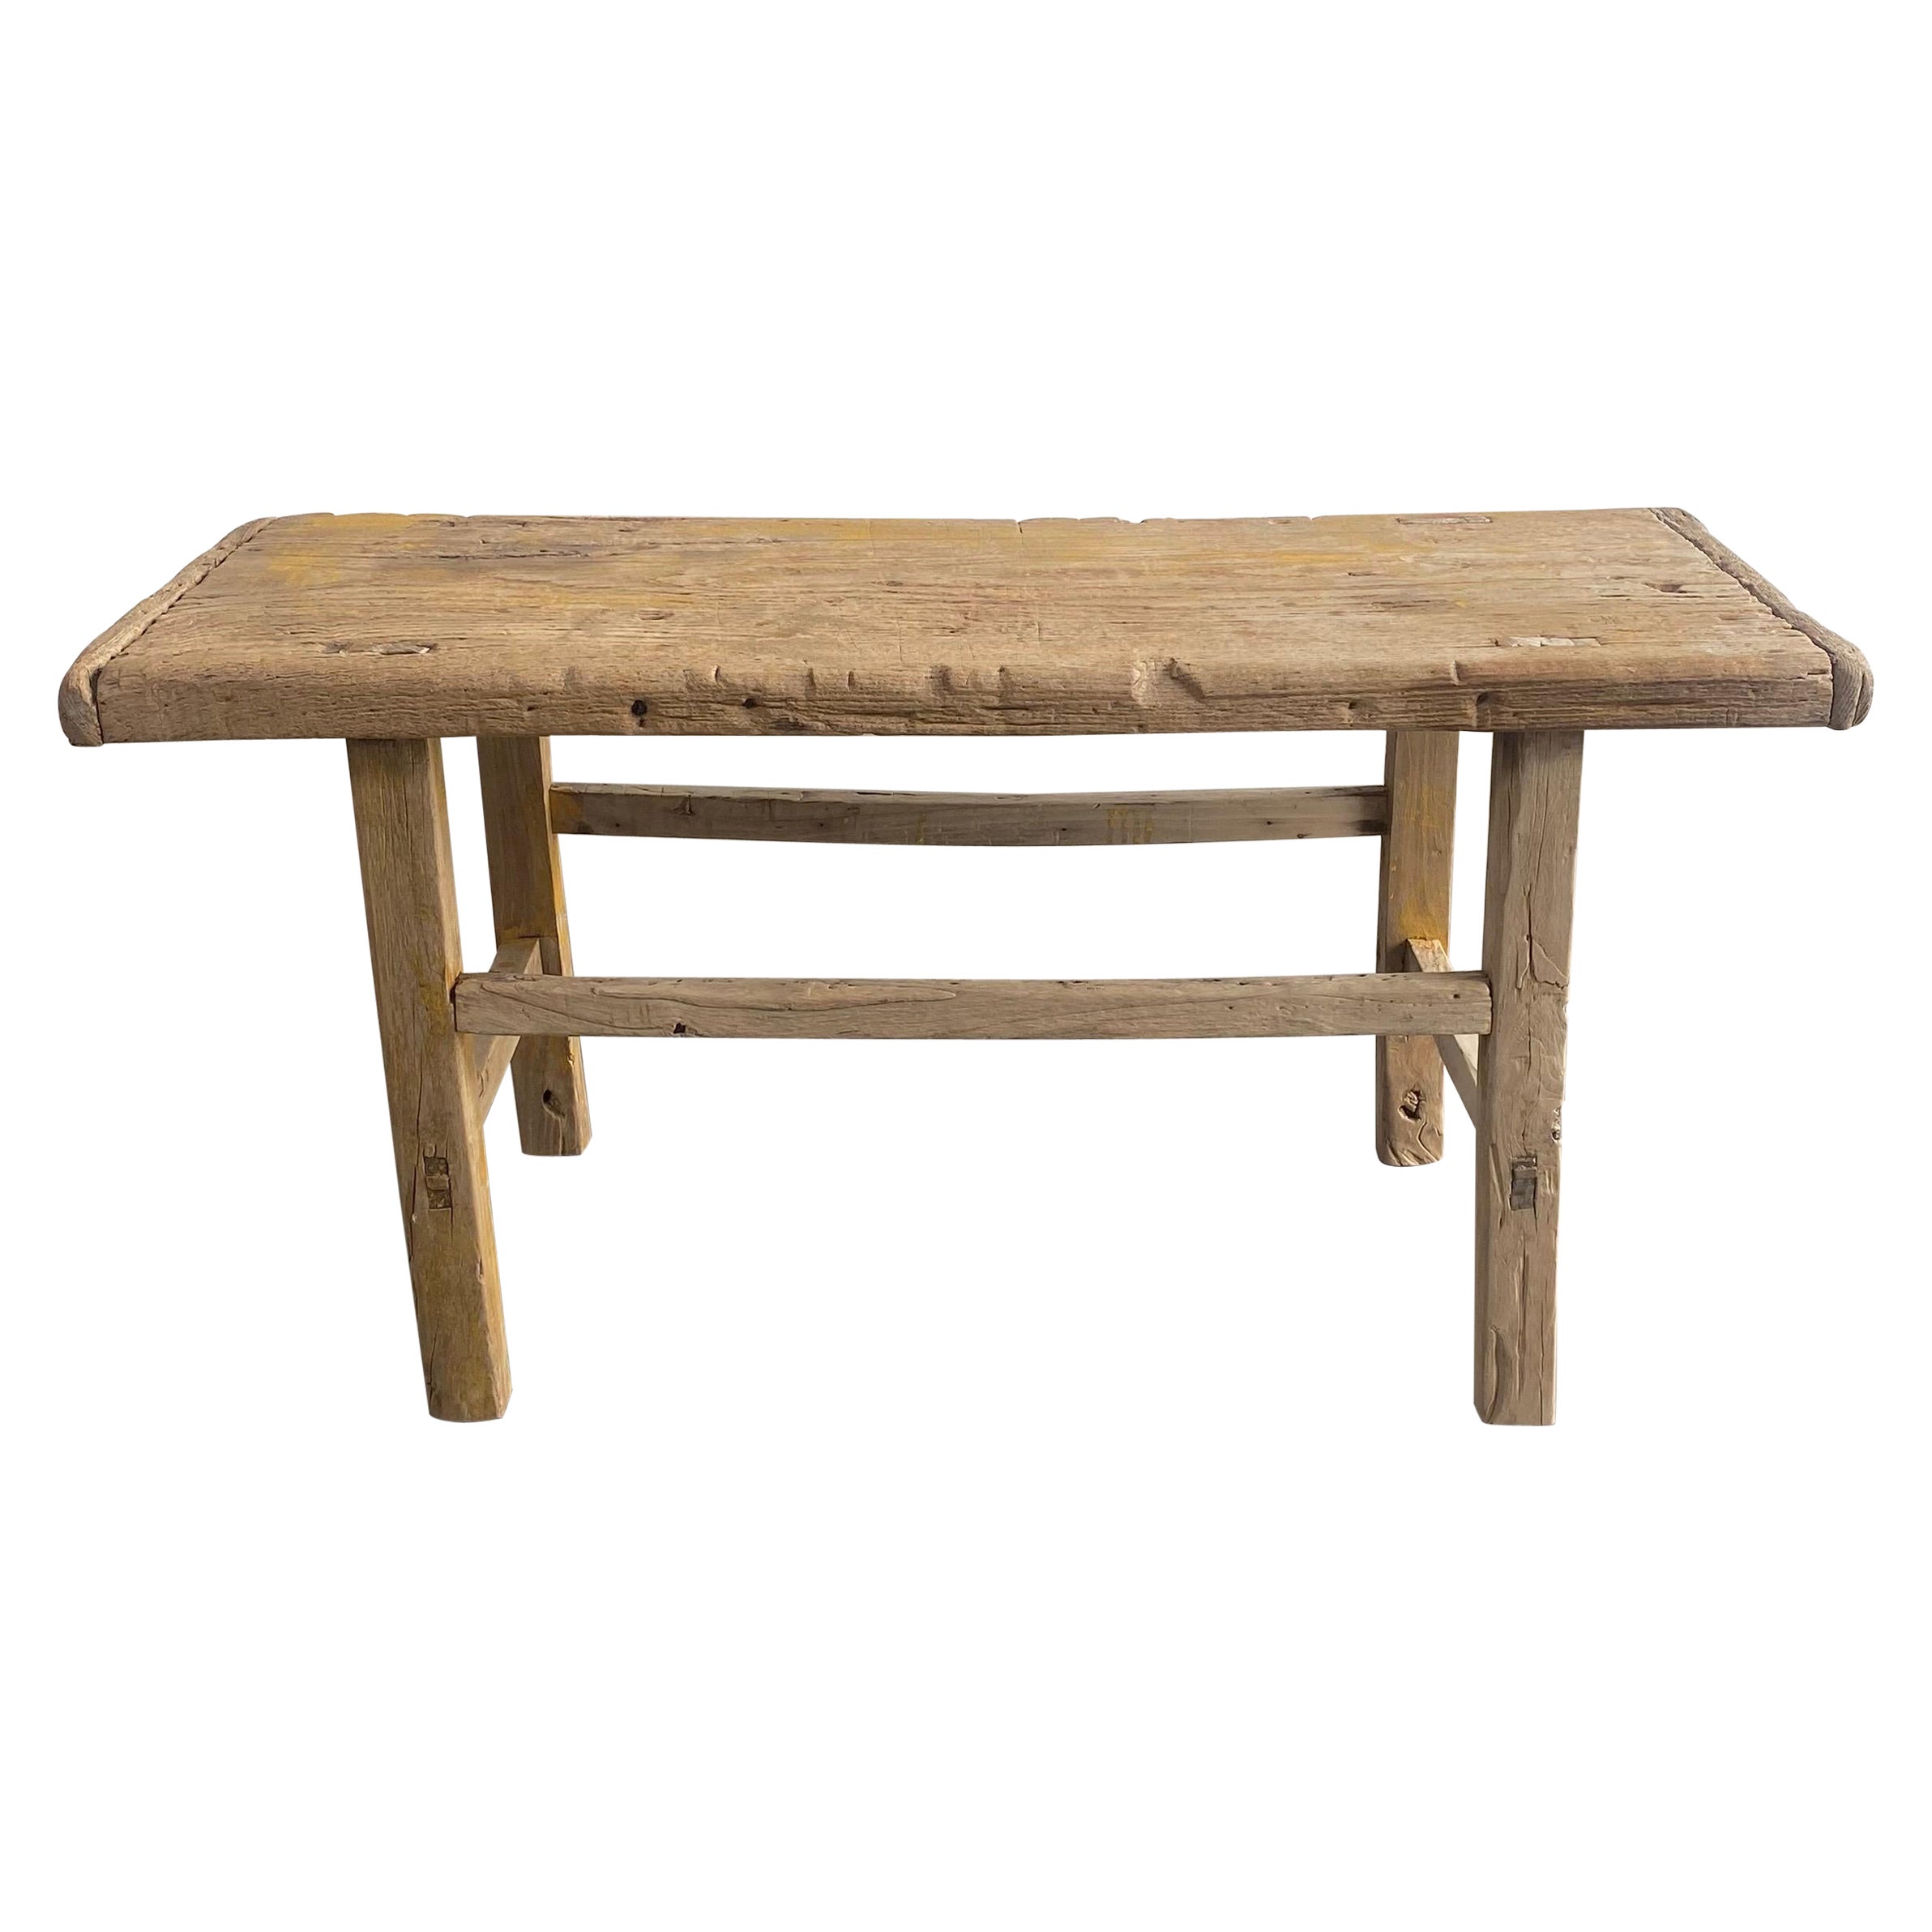 Vintage Elm Wood Coffee Table or Bench